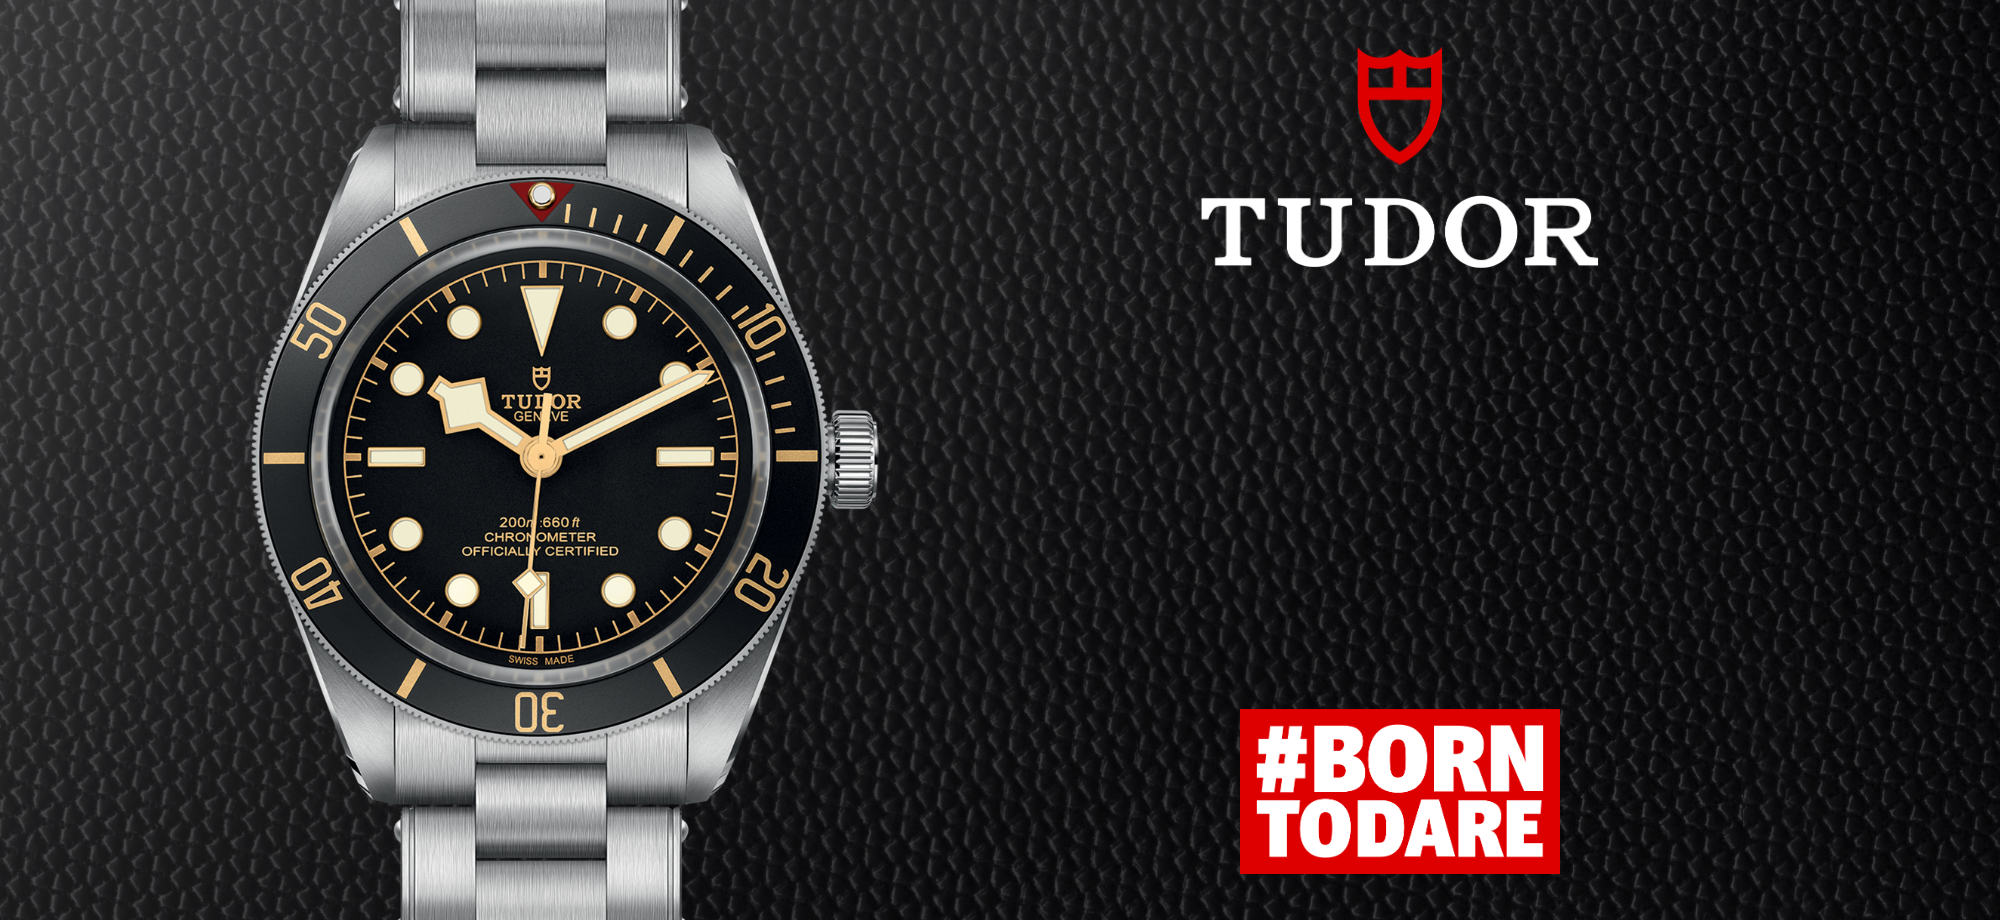 Tudor logo with a watch beside it, #BORNTODARE listed below